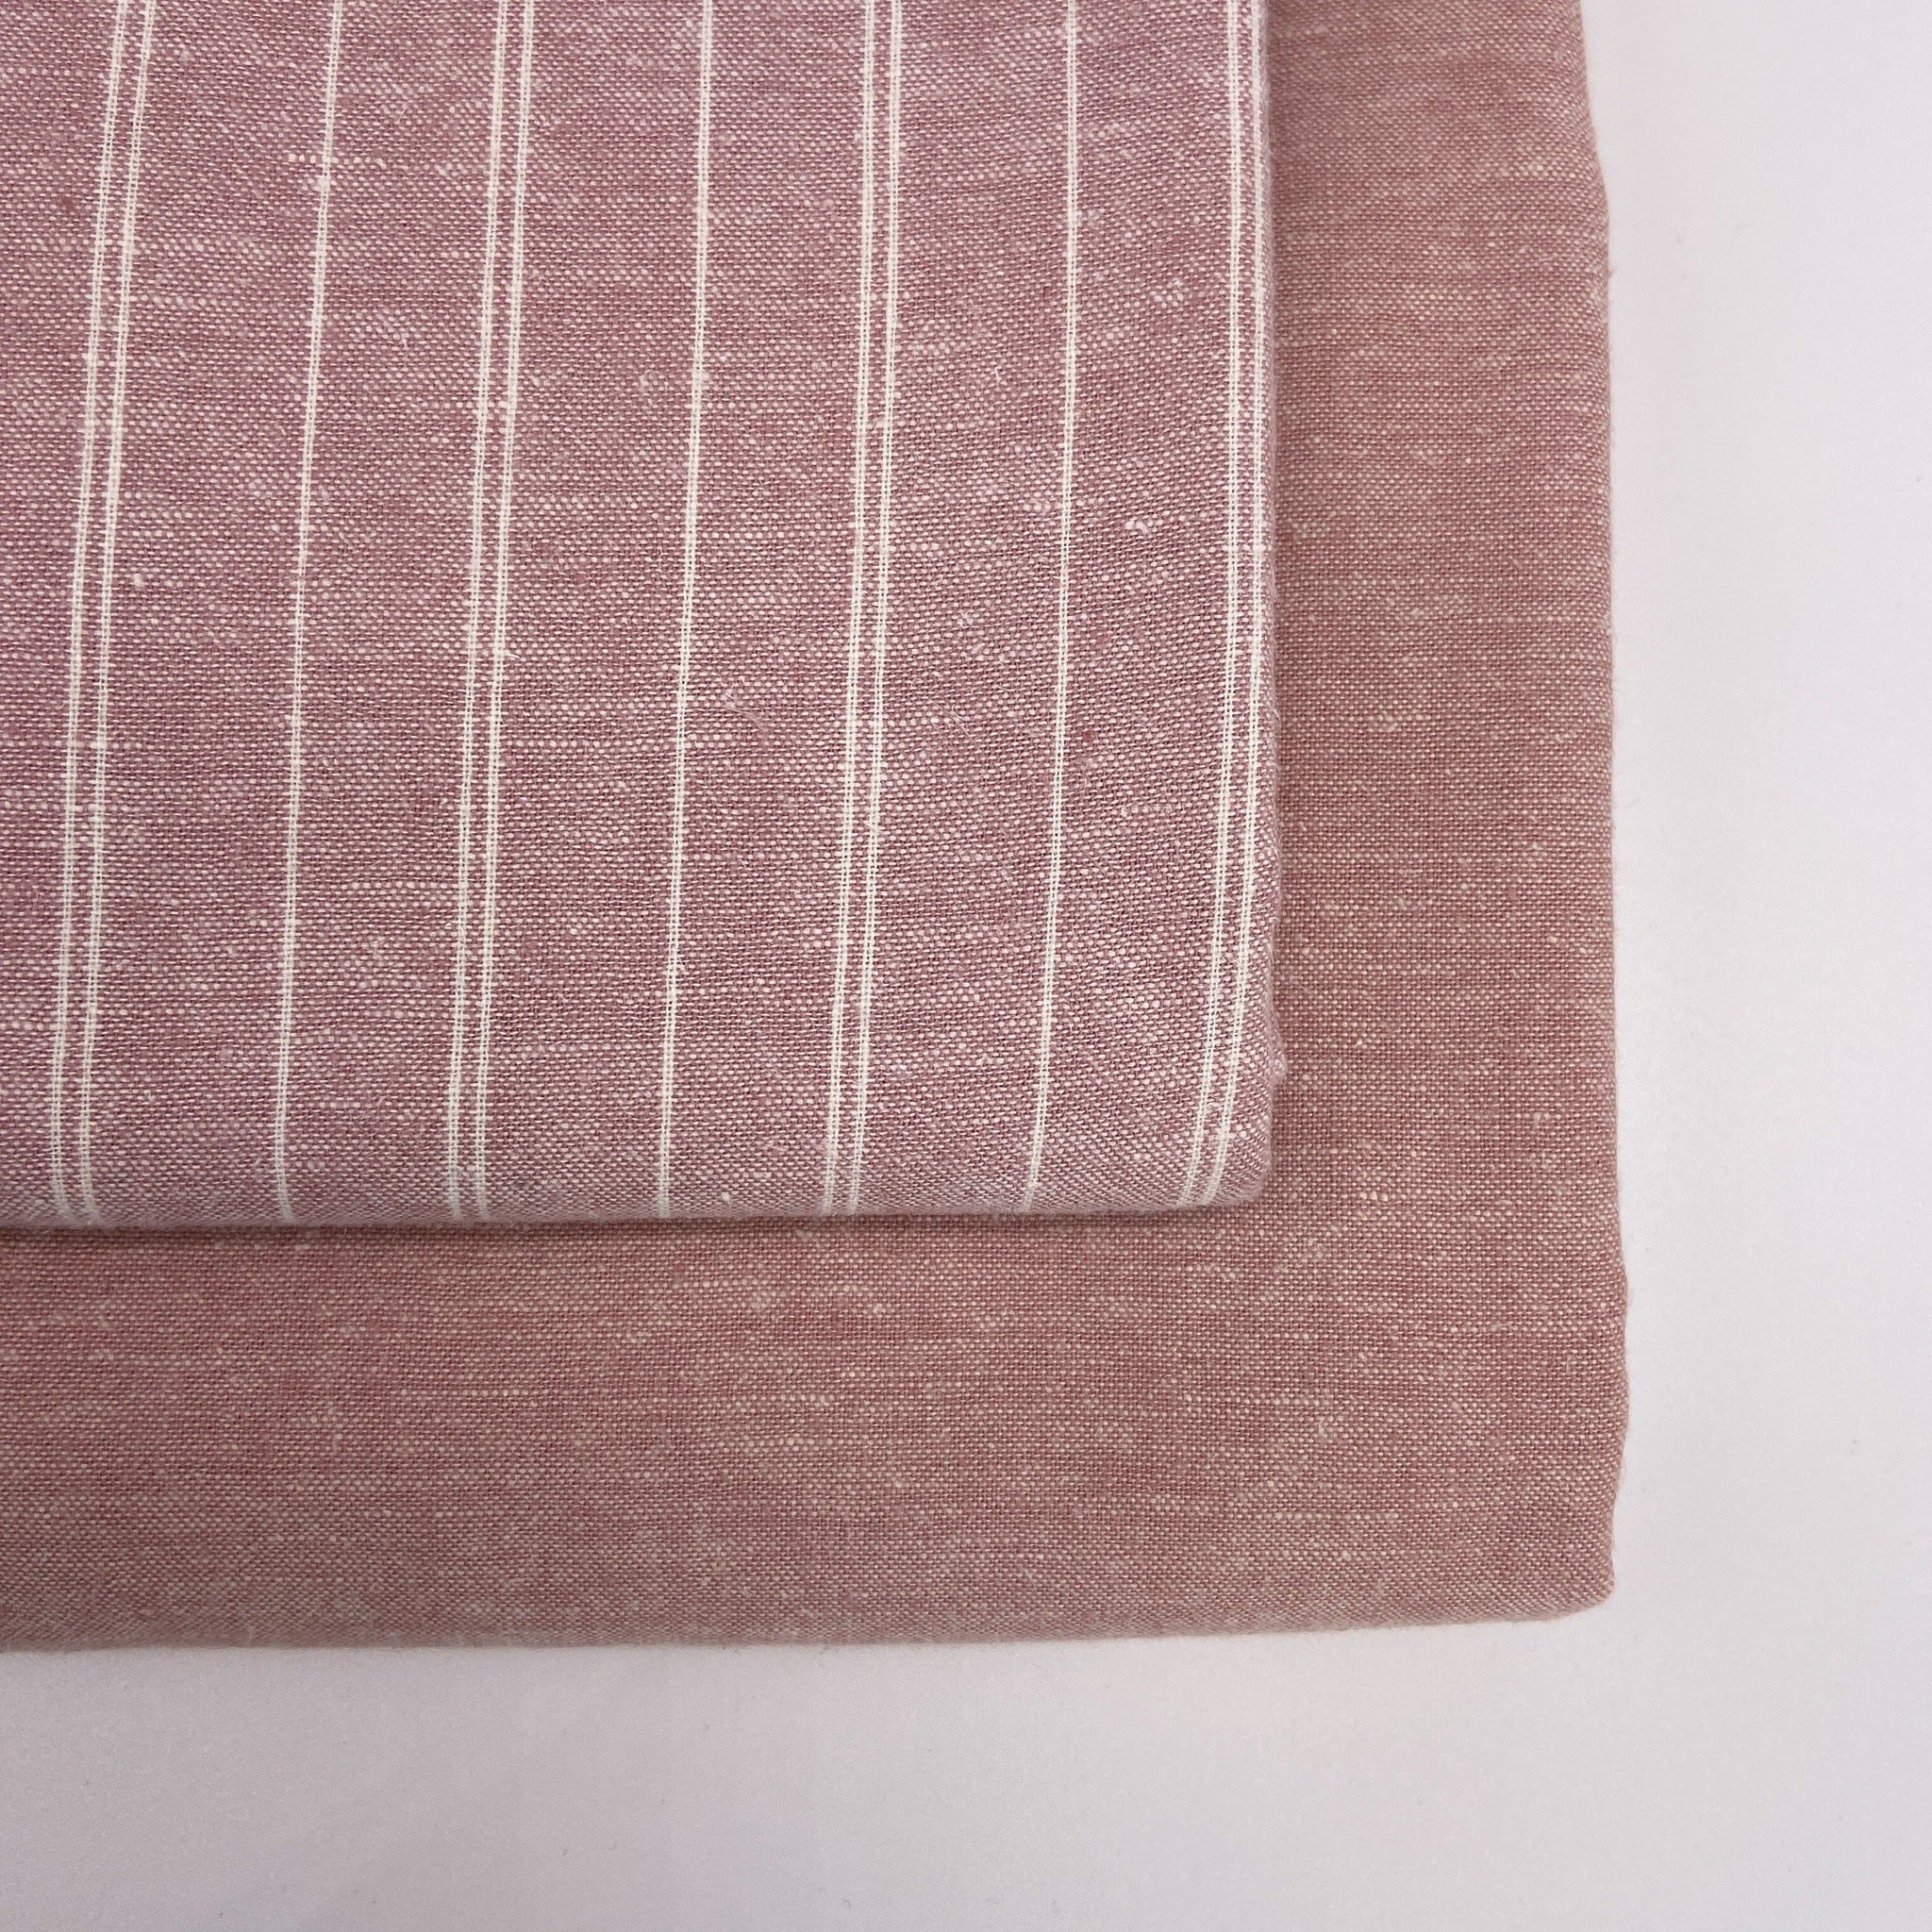 Hemp Organic Cotton Lightweight - Old Rose Stripe